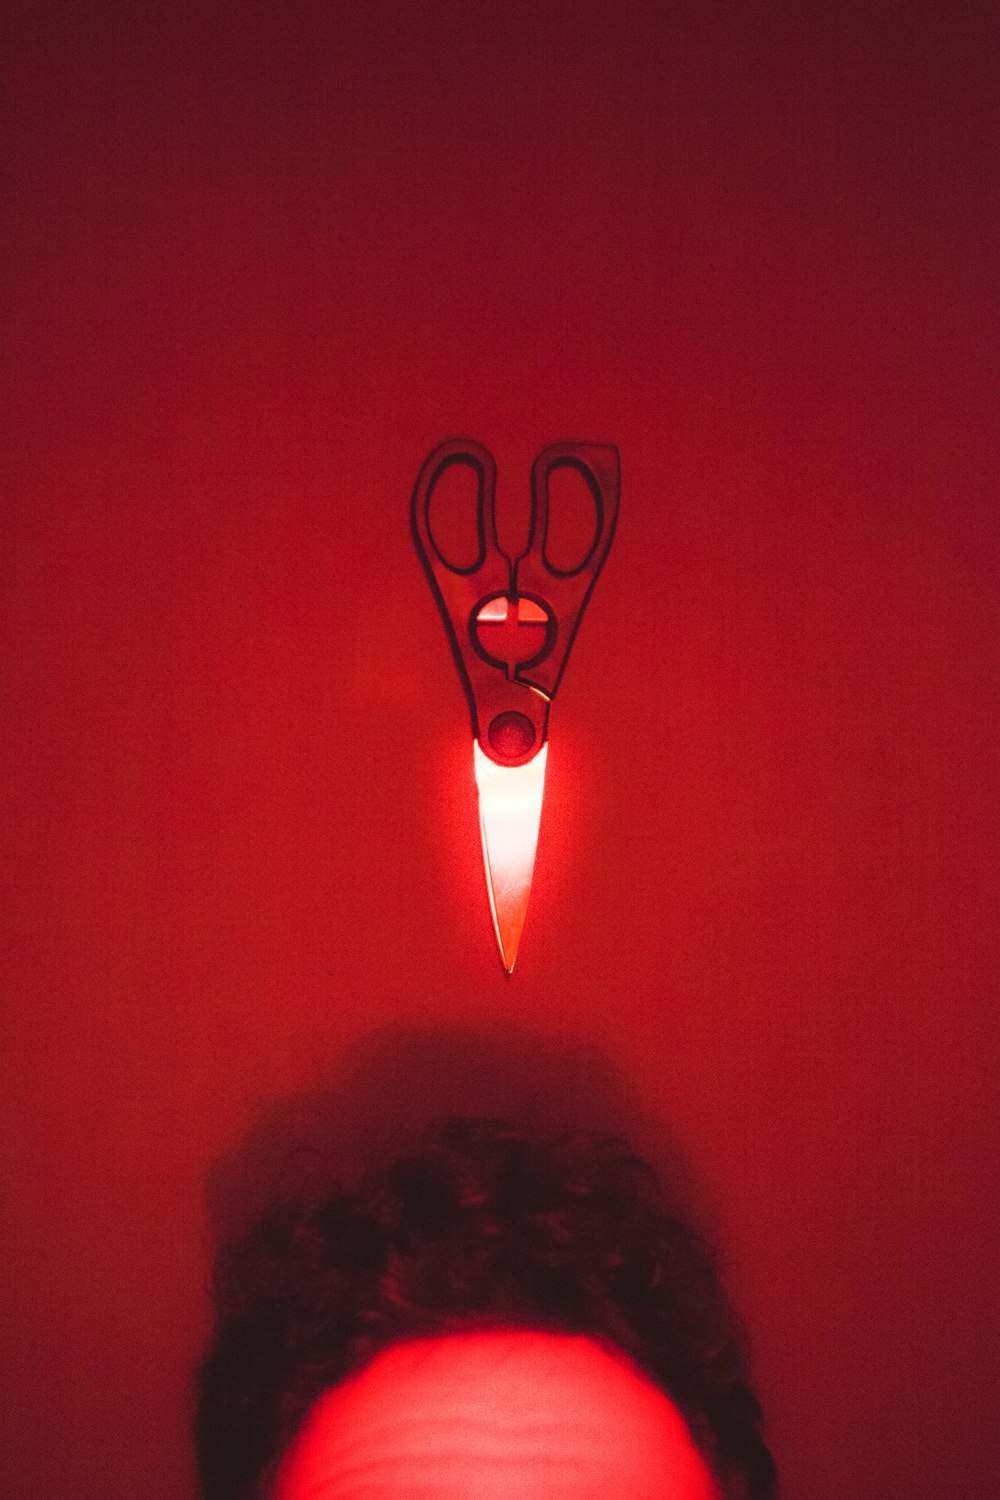 black handled scissors on red textile